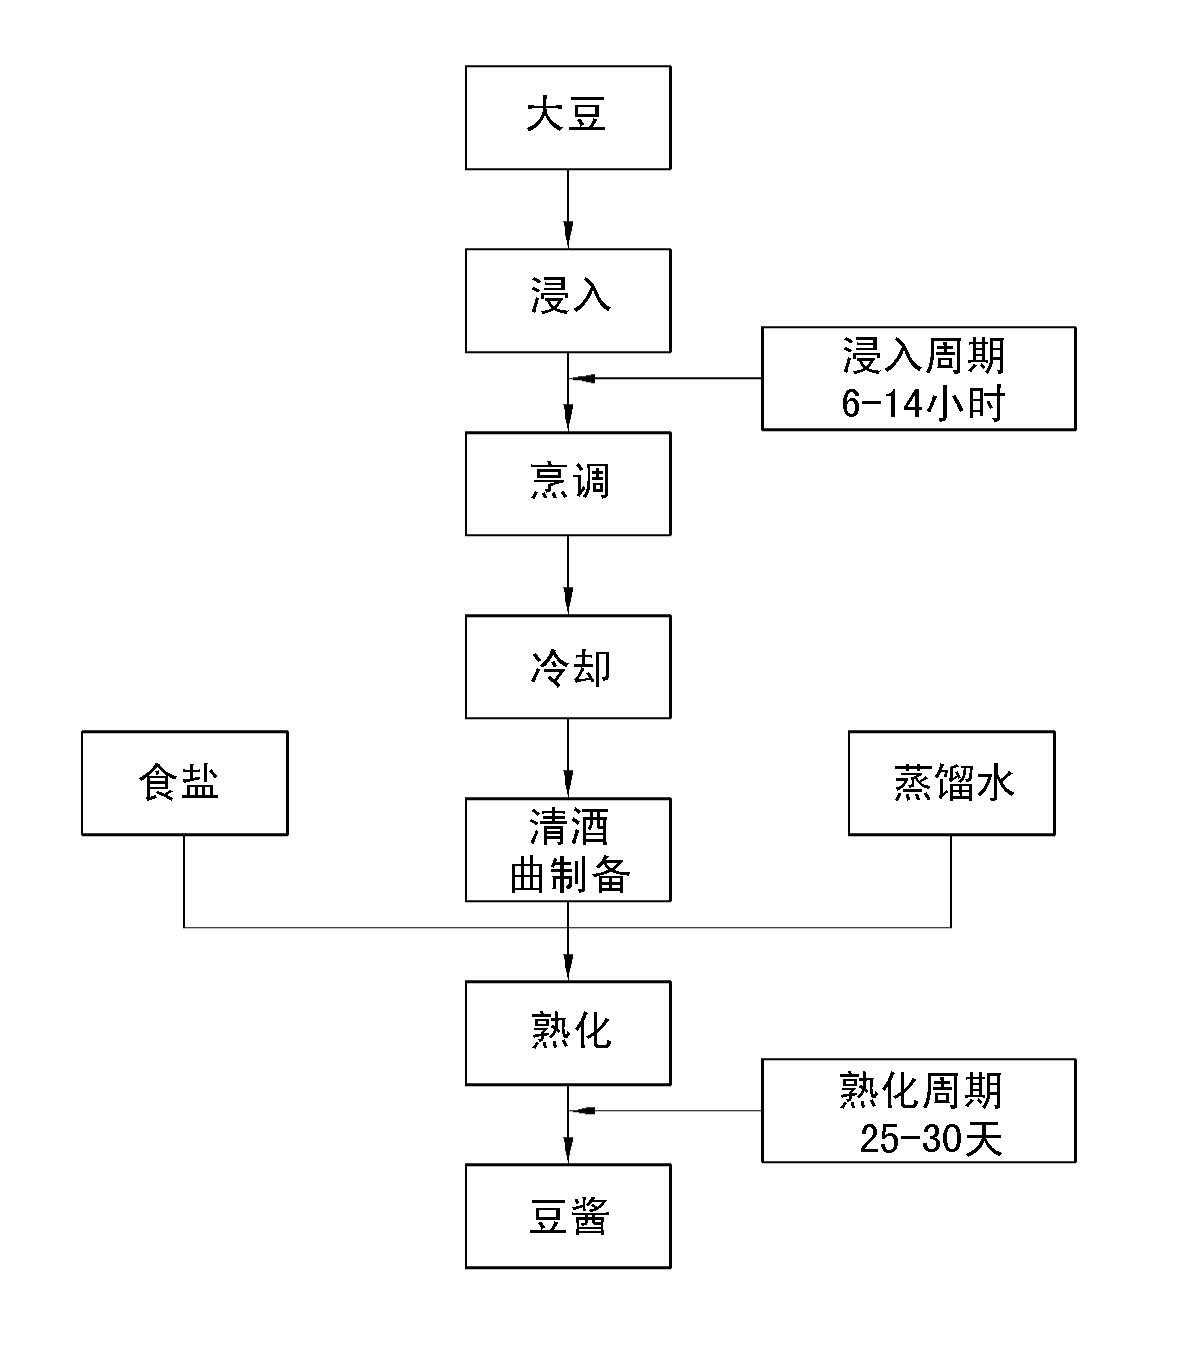 Method for preparing soybean paste